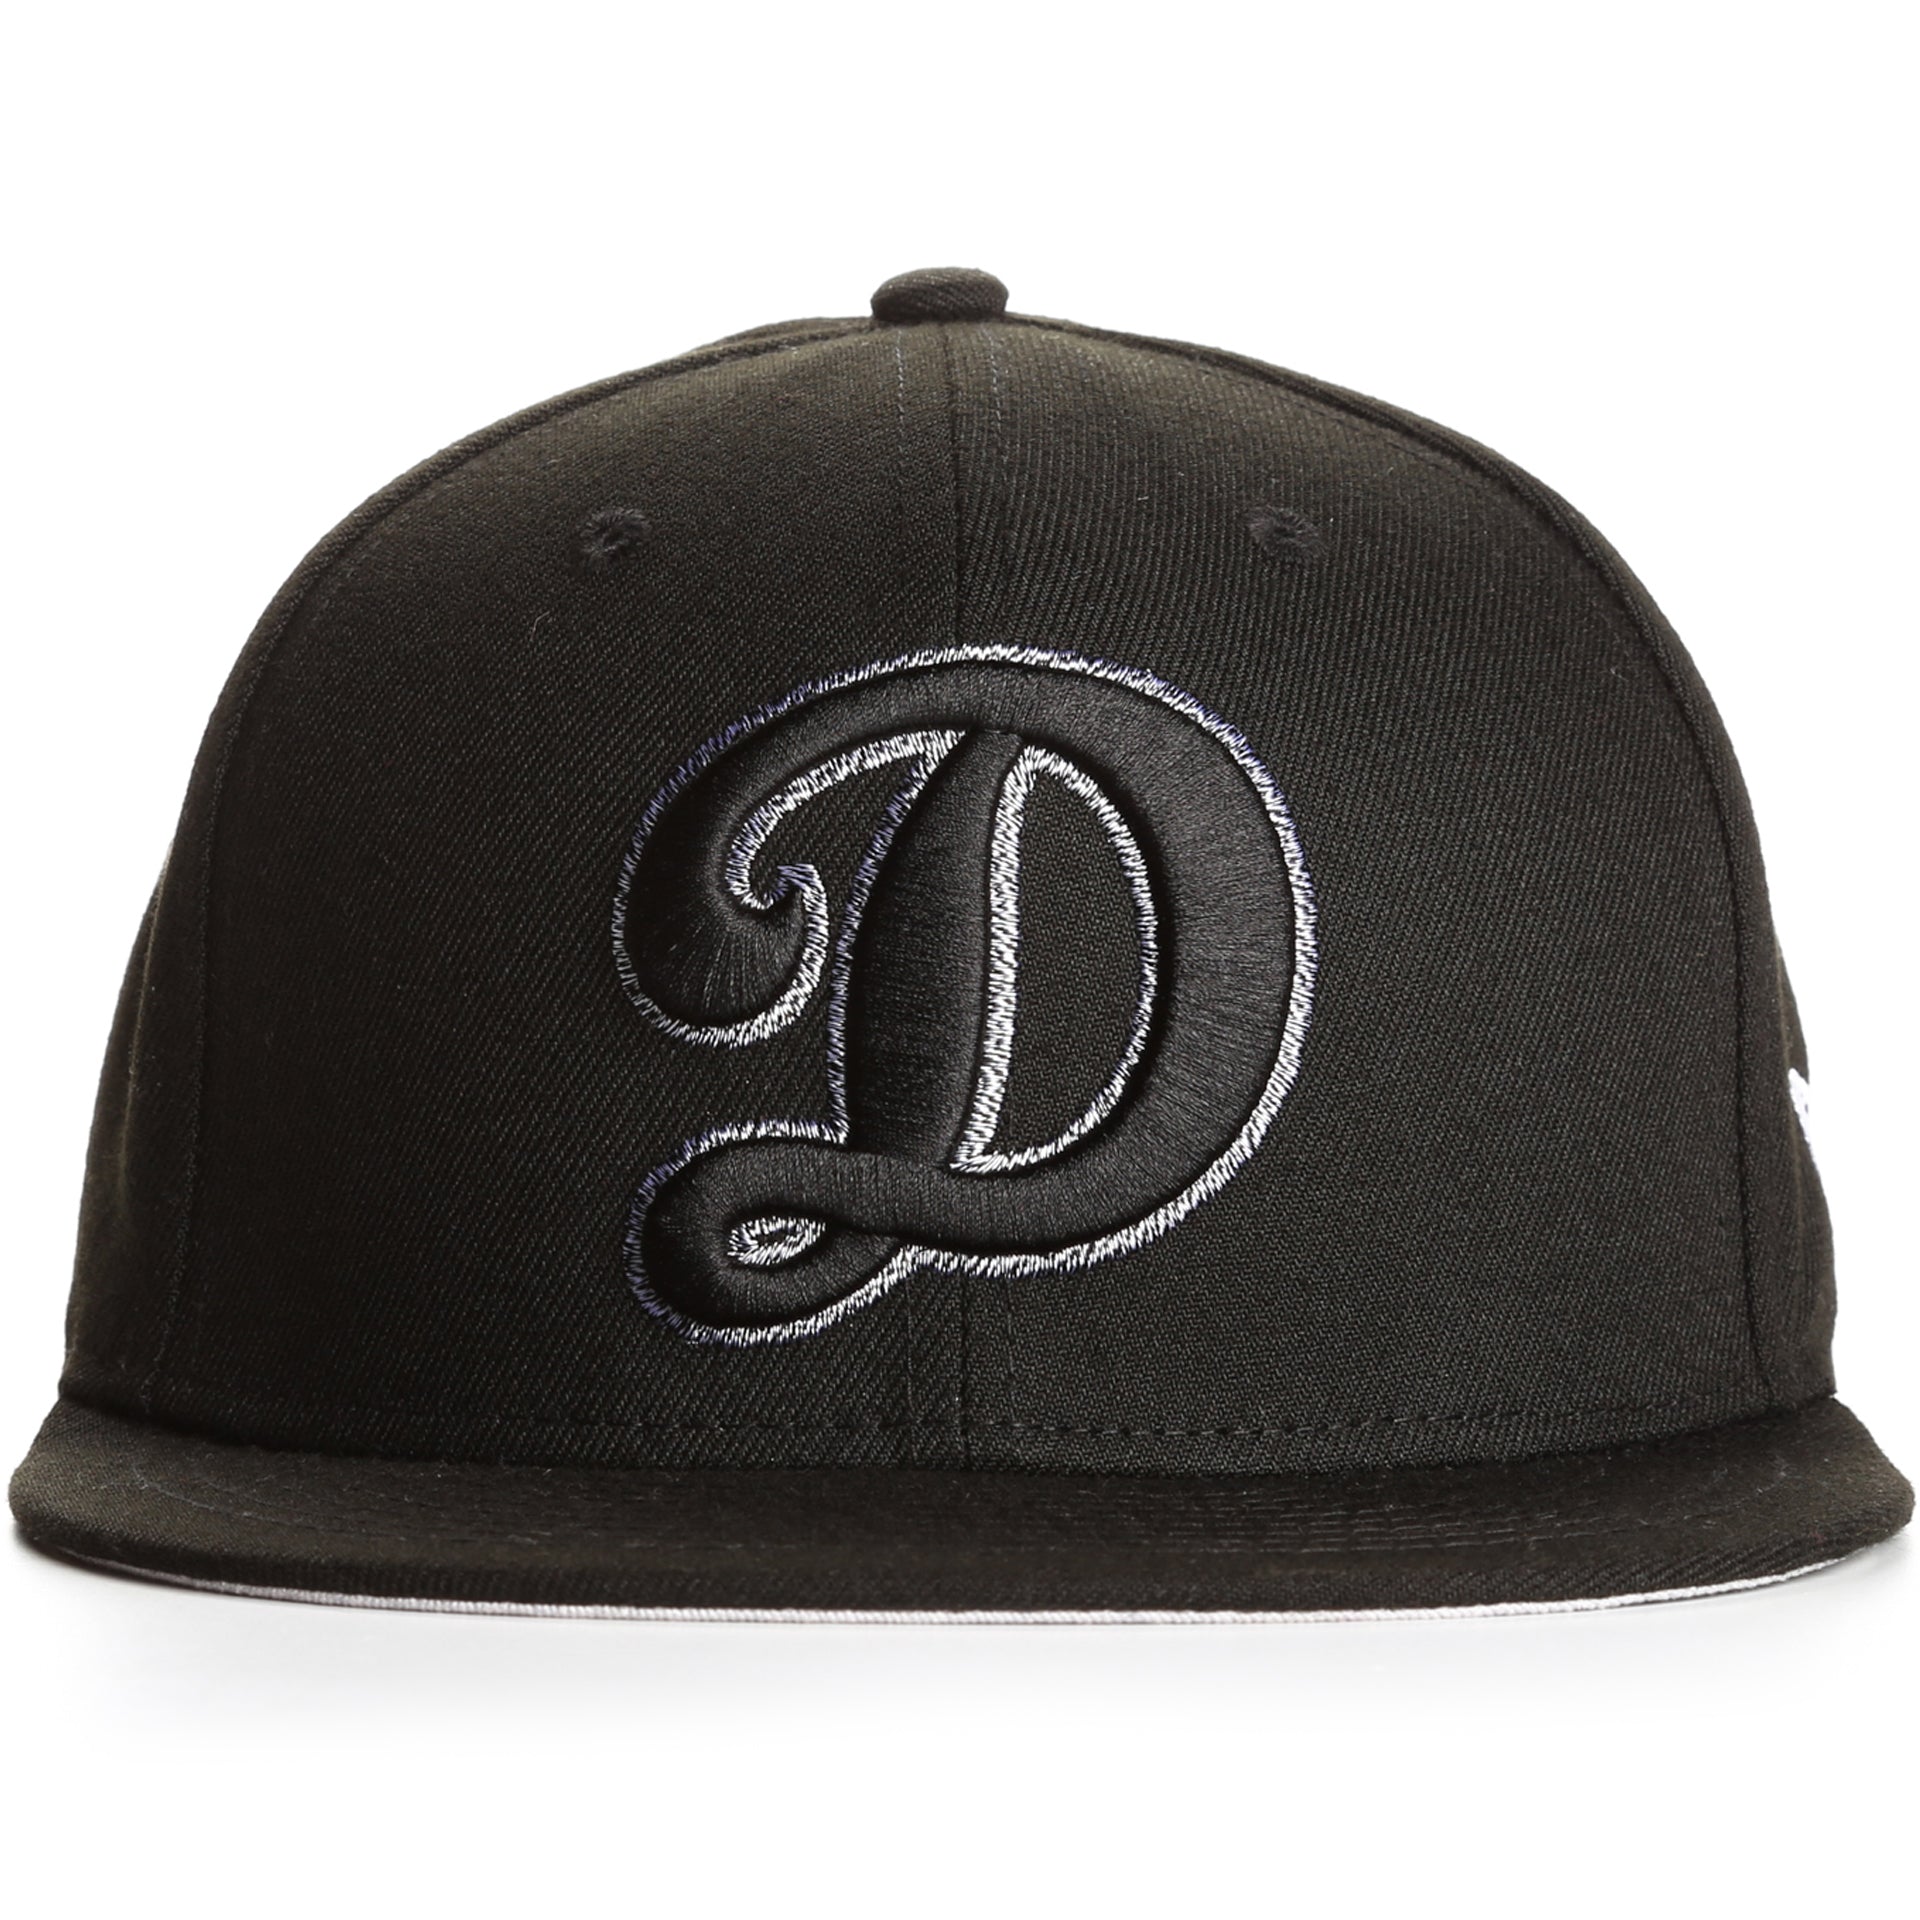 Majestic Dodgers Los Doyers Alternate Tee - Deep Royal - New Star